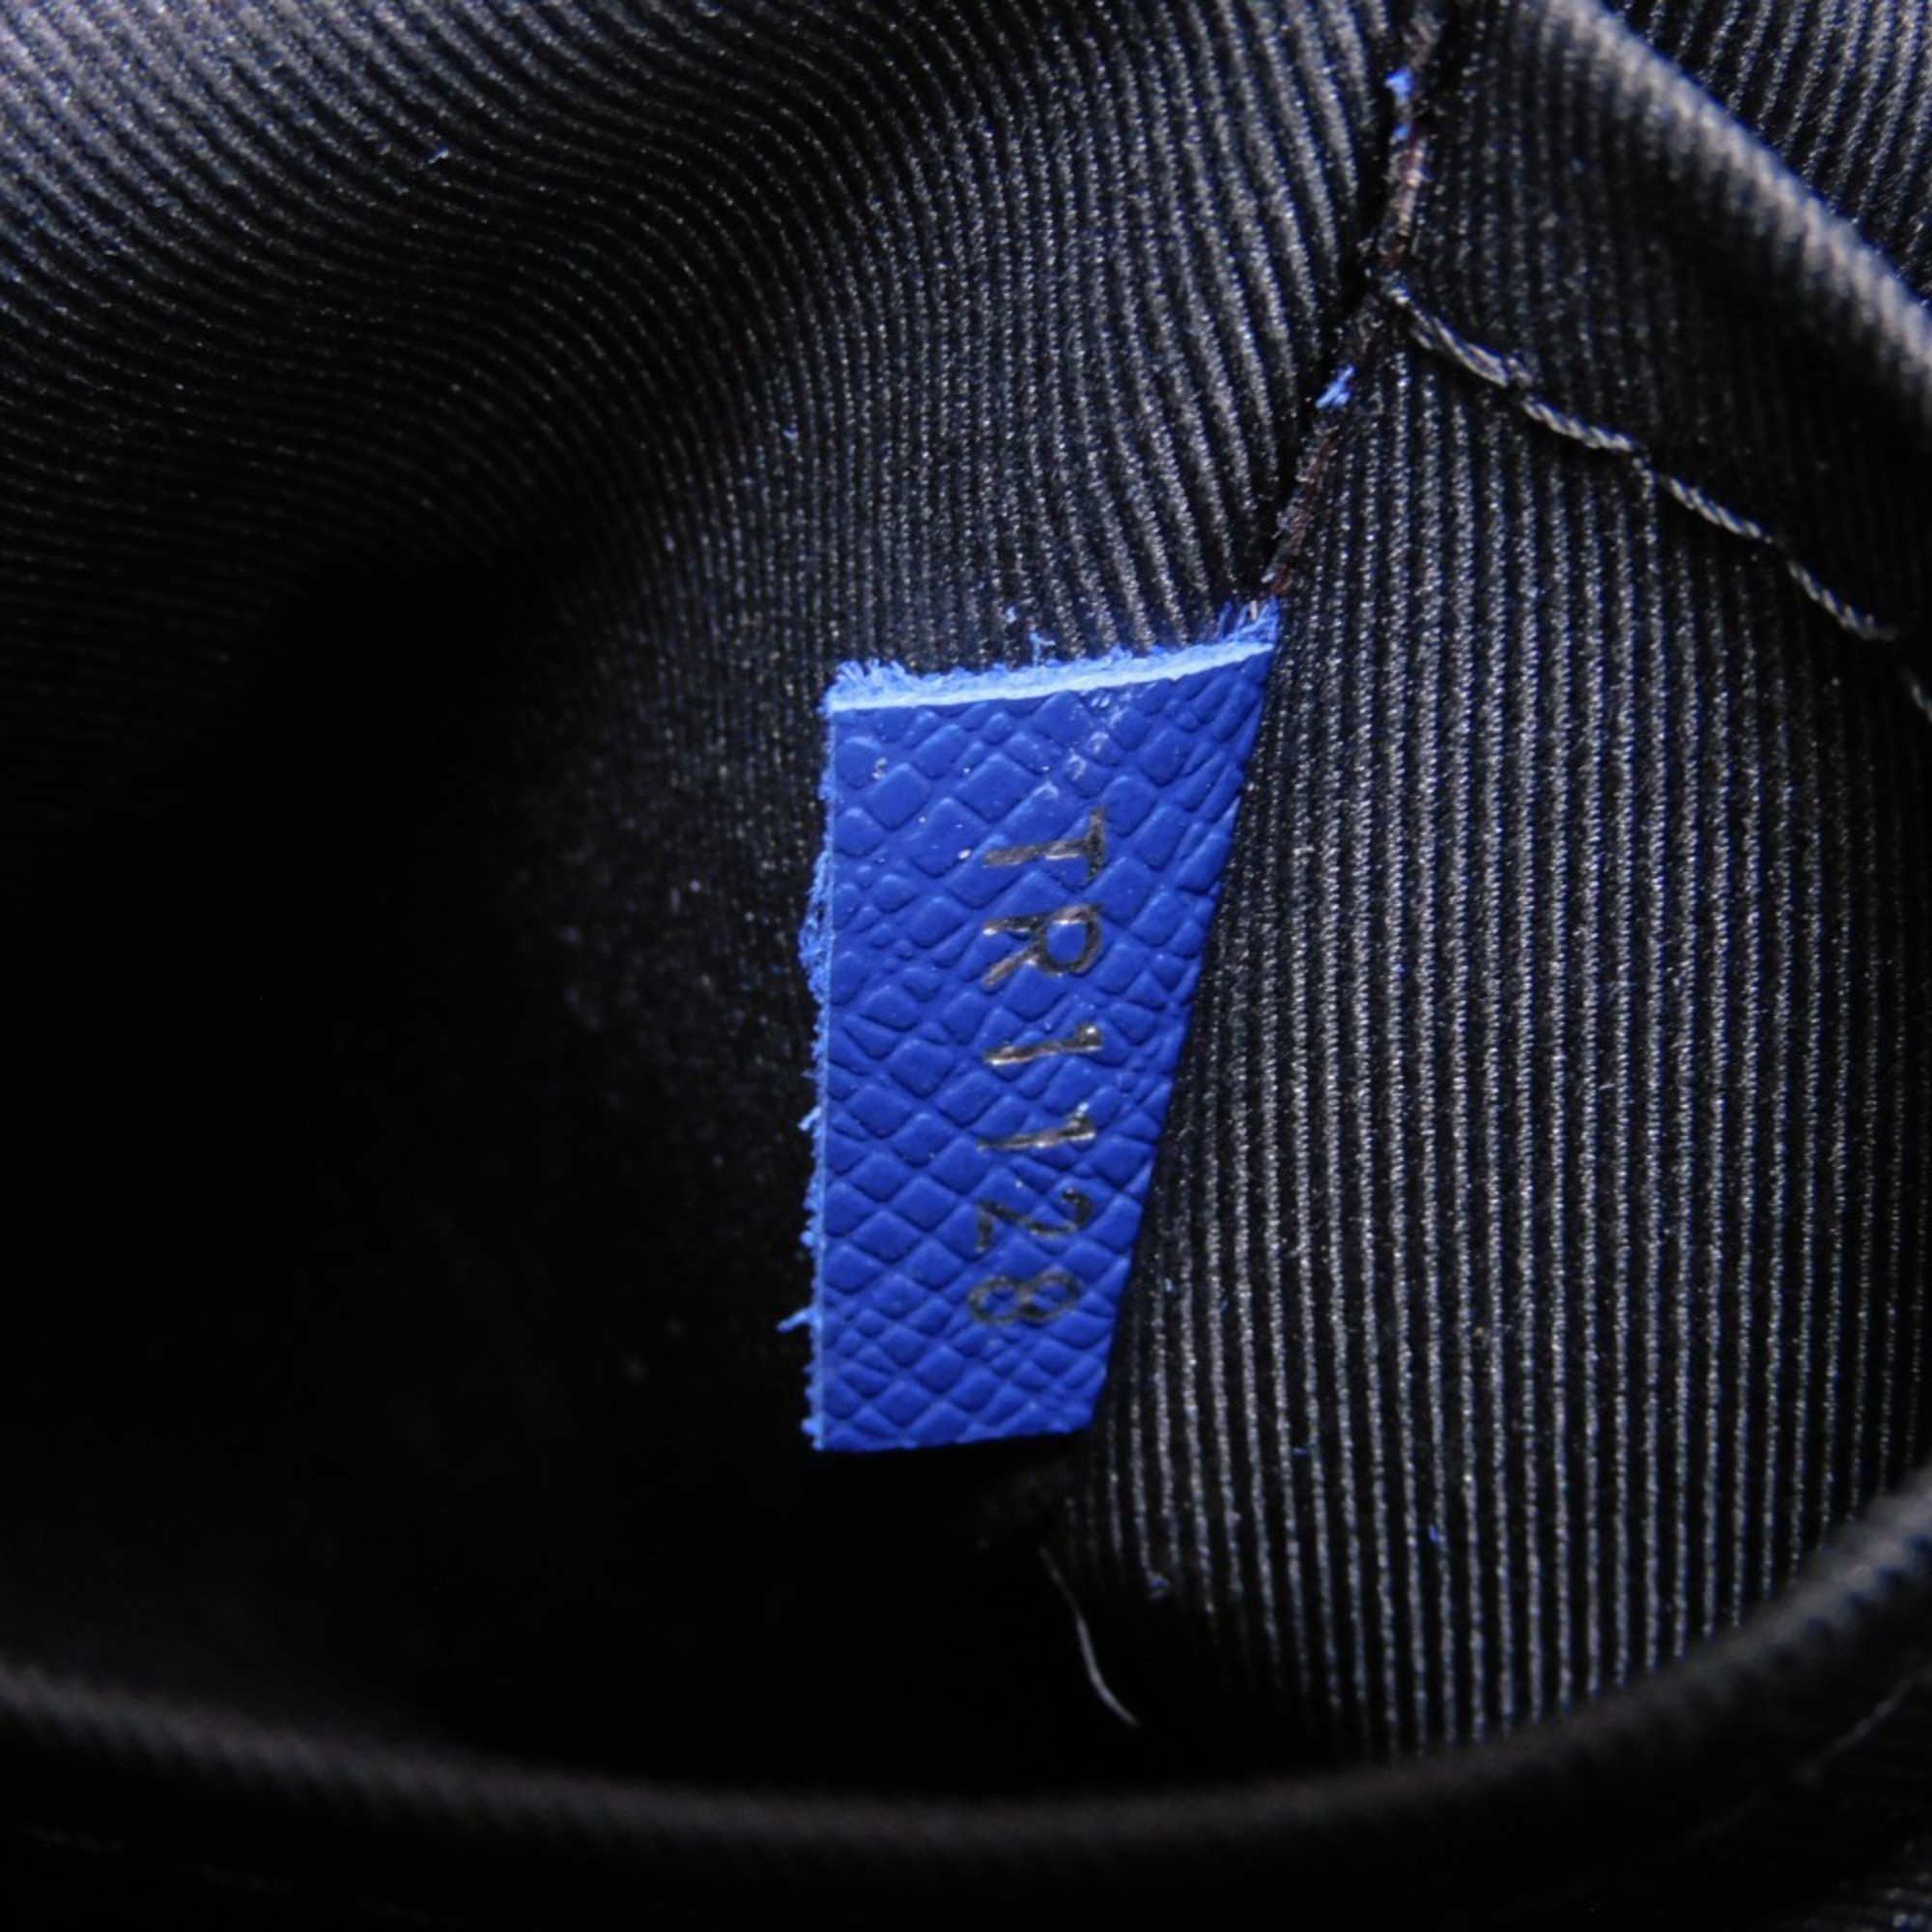 Louis Vuitton LOUIS VUITTON Backpack Apollo Embossed Blue W Daypack Taiga Cobalt M33453 Men's